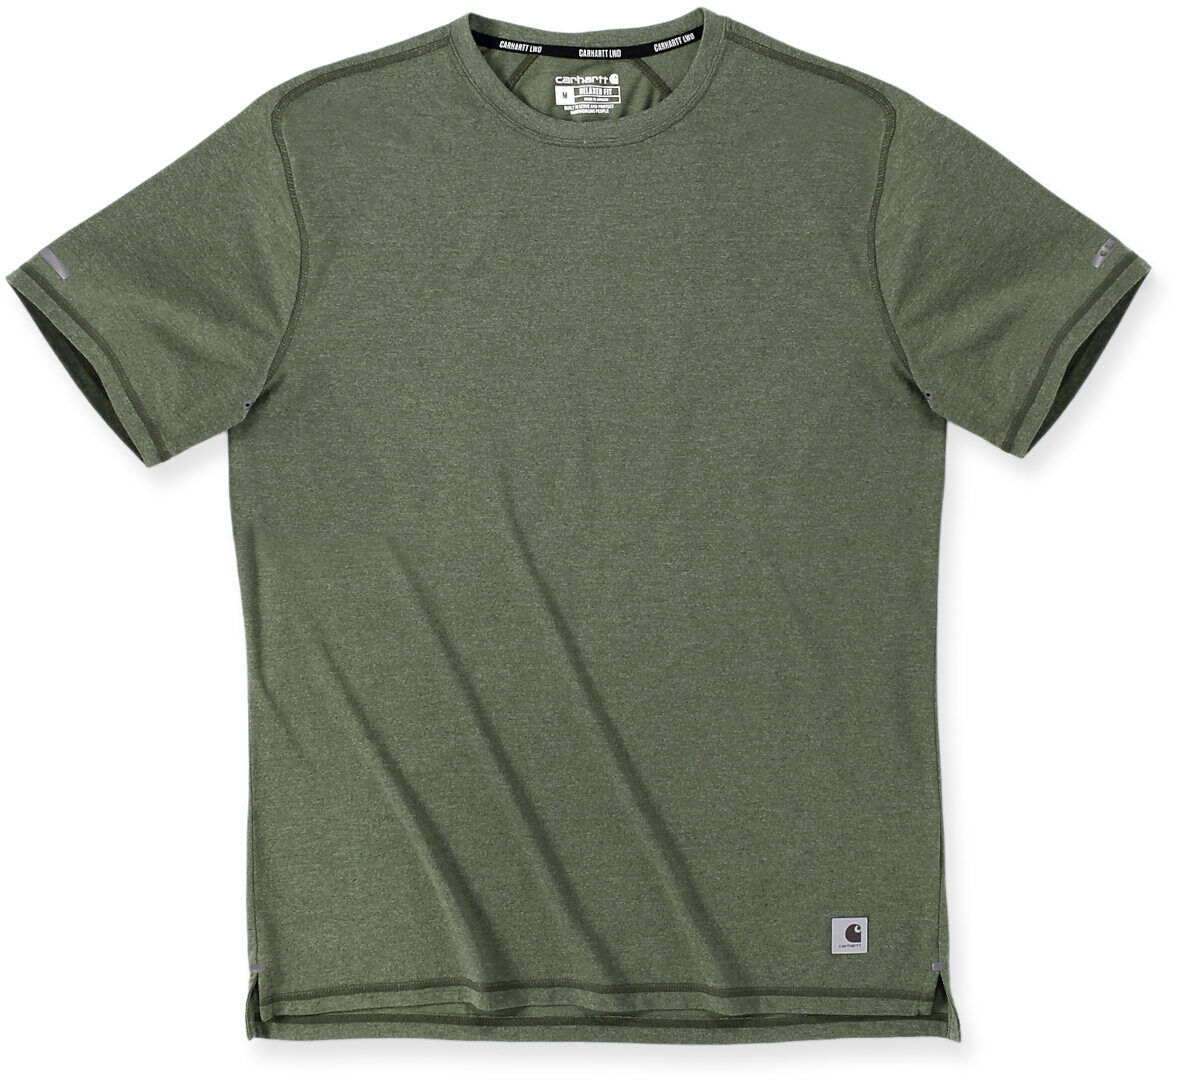 Carhartt Lightweight Durable Relaxed Fit Camiseta - Verde (M)